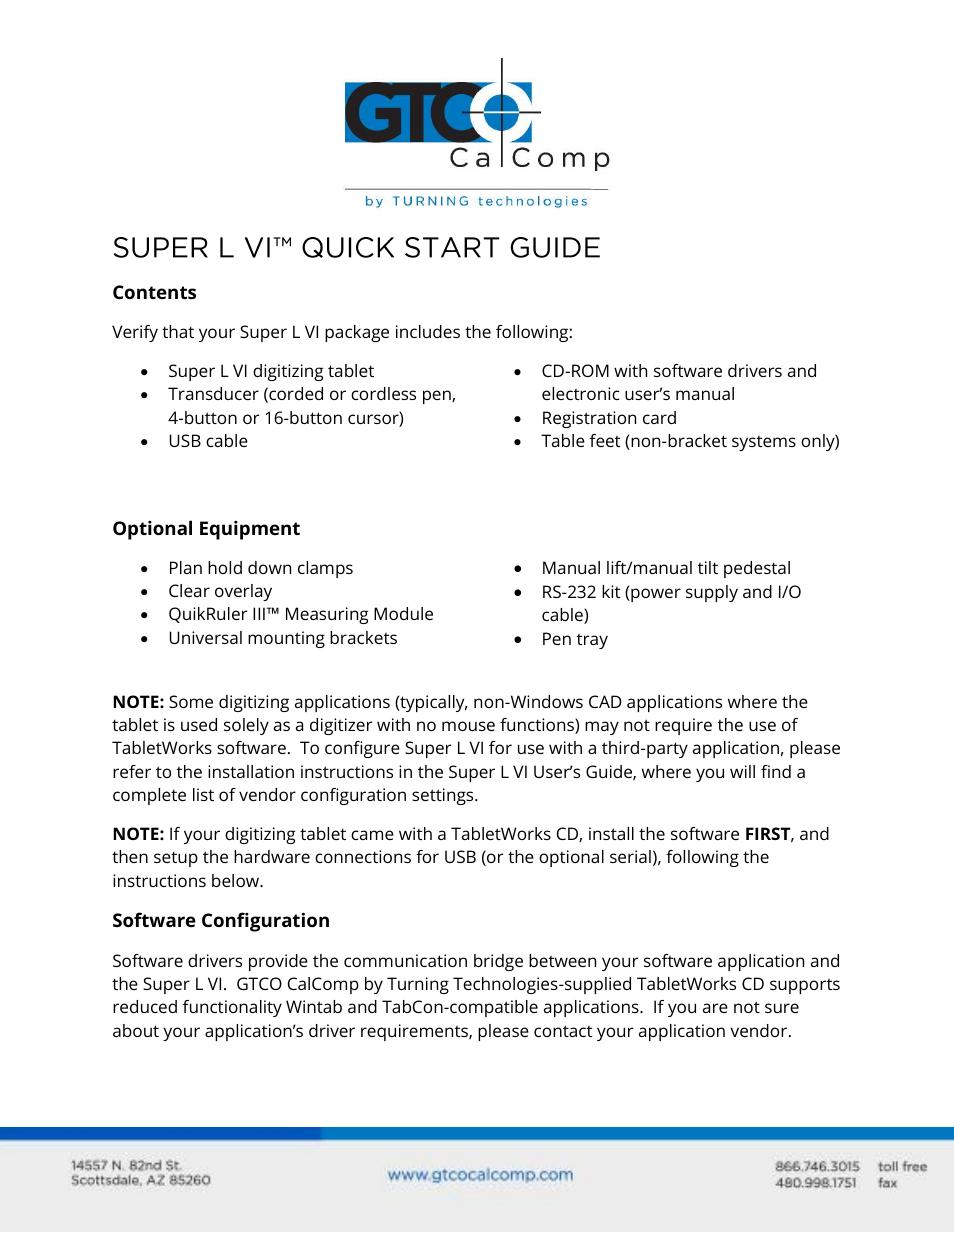 Super L VI - Quick Start Guide